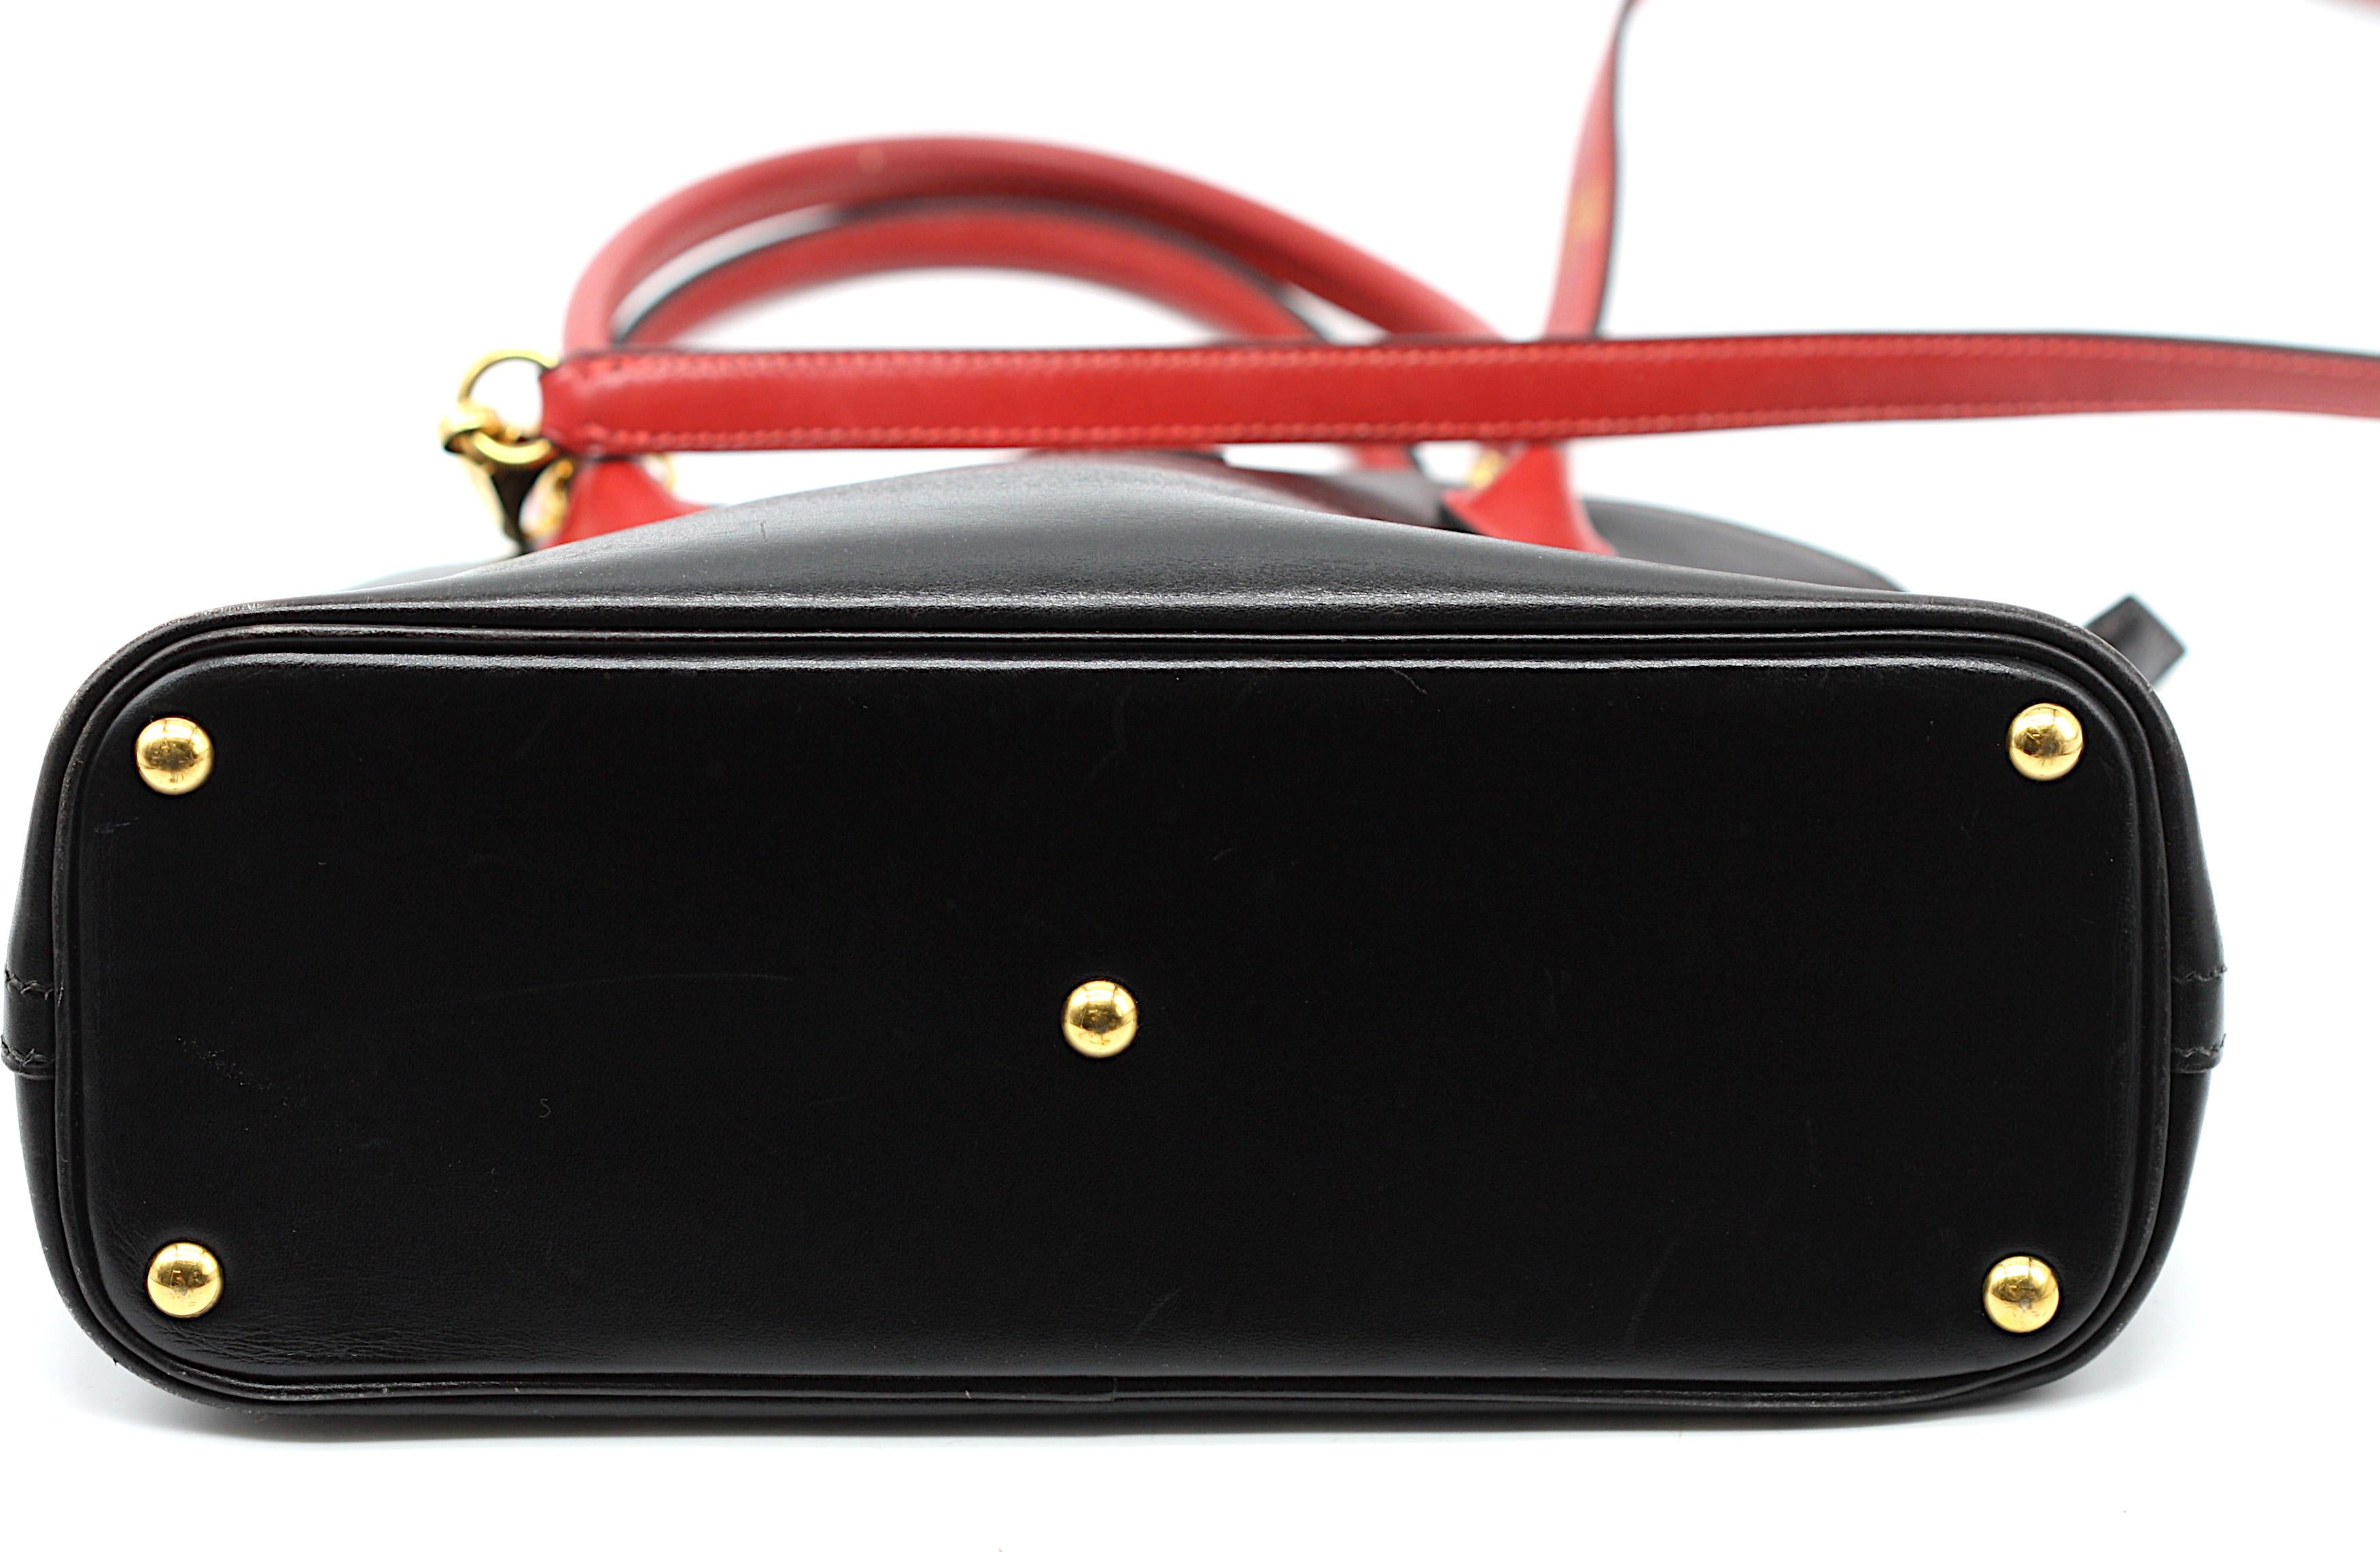 Hermes Box Calf Black and Red Leather Bolide Handbag For Sale 1